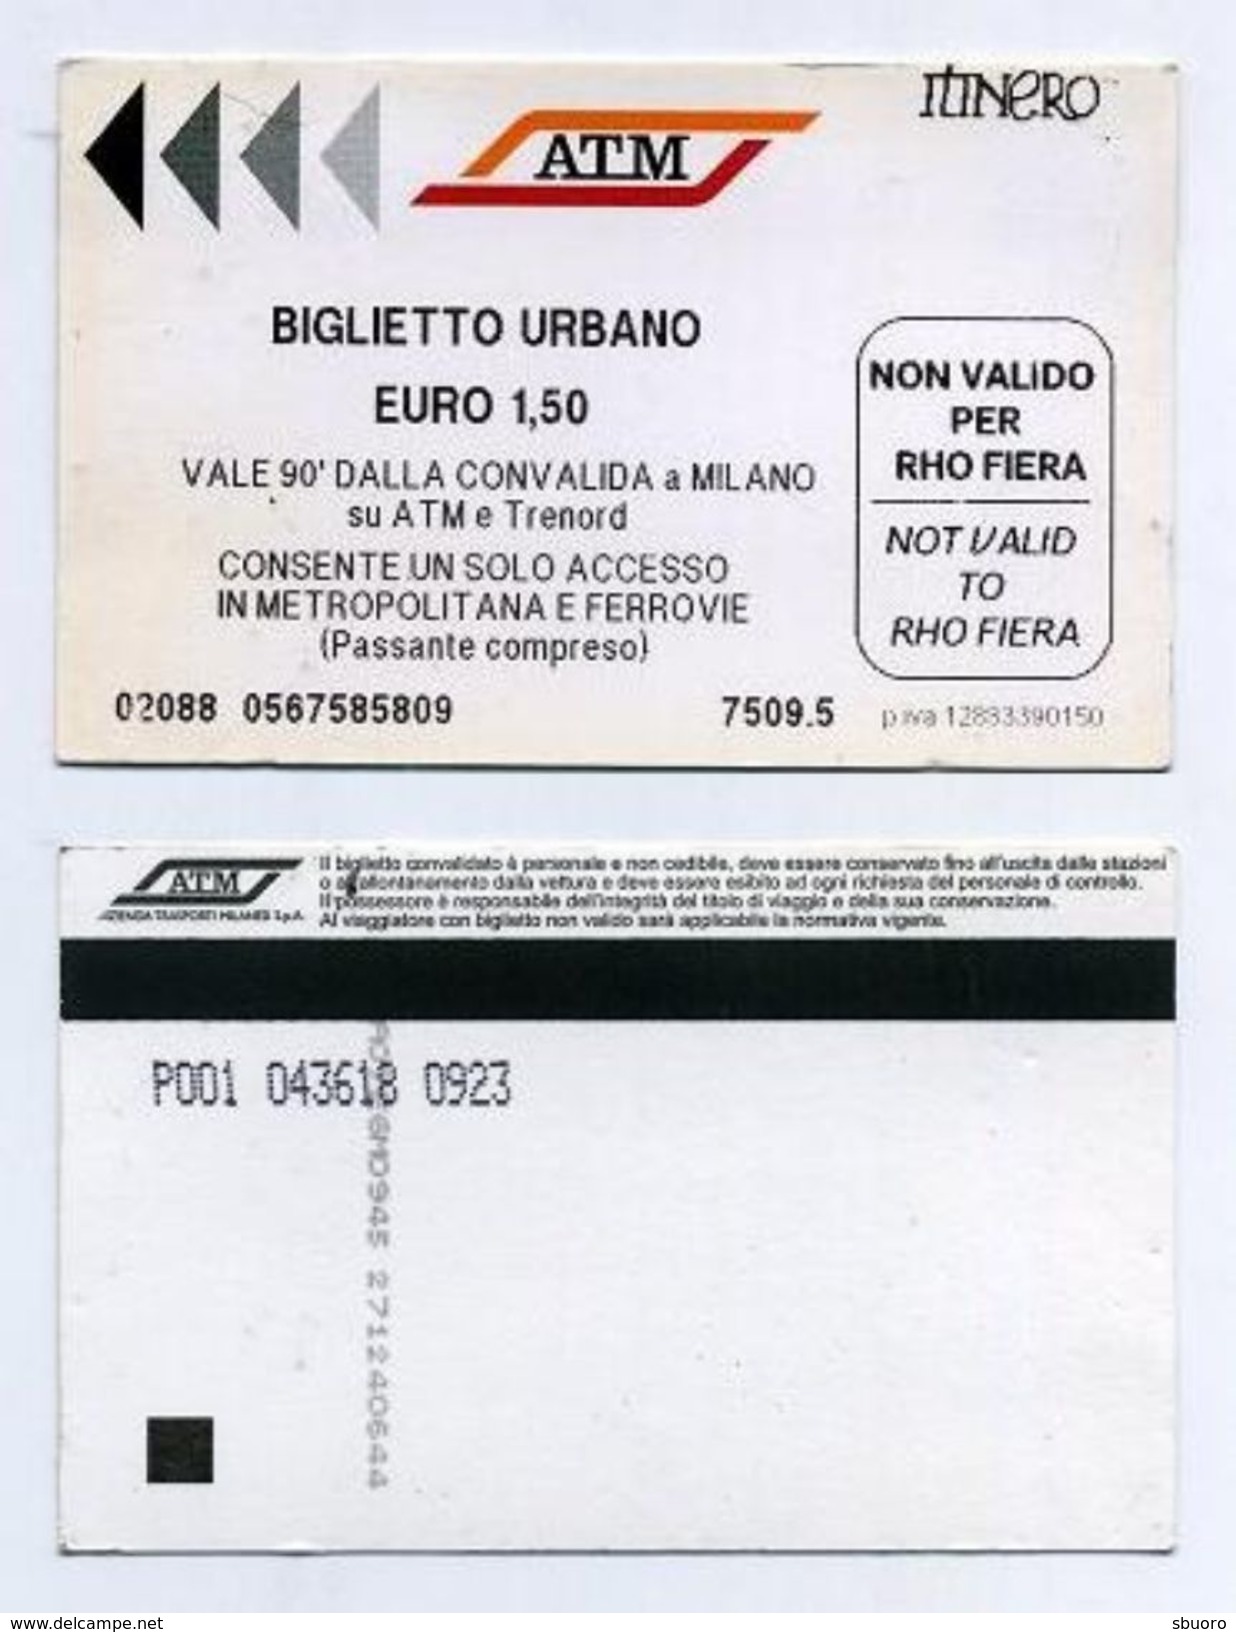 Ticket De Metro - Milan, Italie - Biglietto Urbano - ATM Itinero - Not Valid To Rho Fiera - Europe